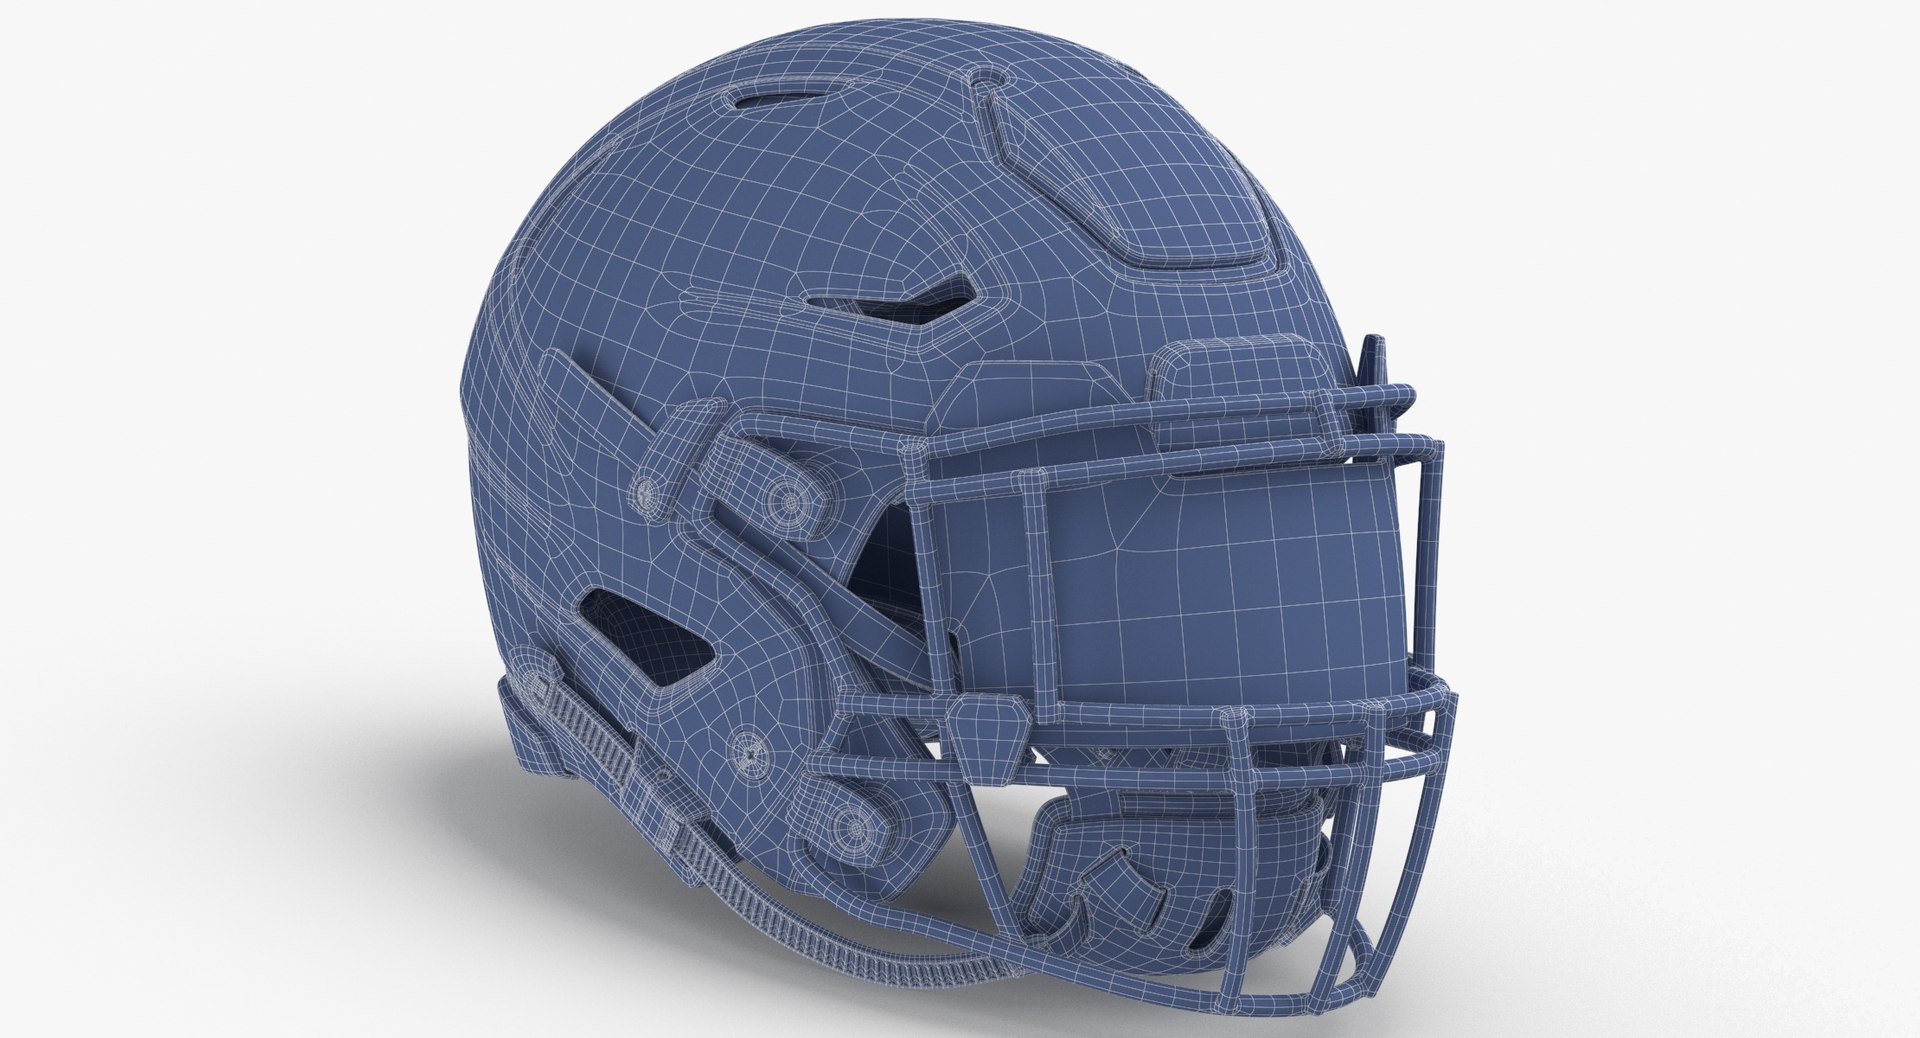 Riddell SpeedFlex Adult Football Helmet With Facemask - 3D Model